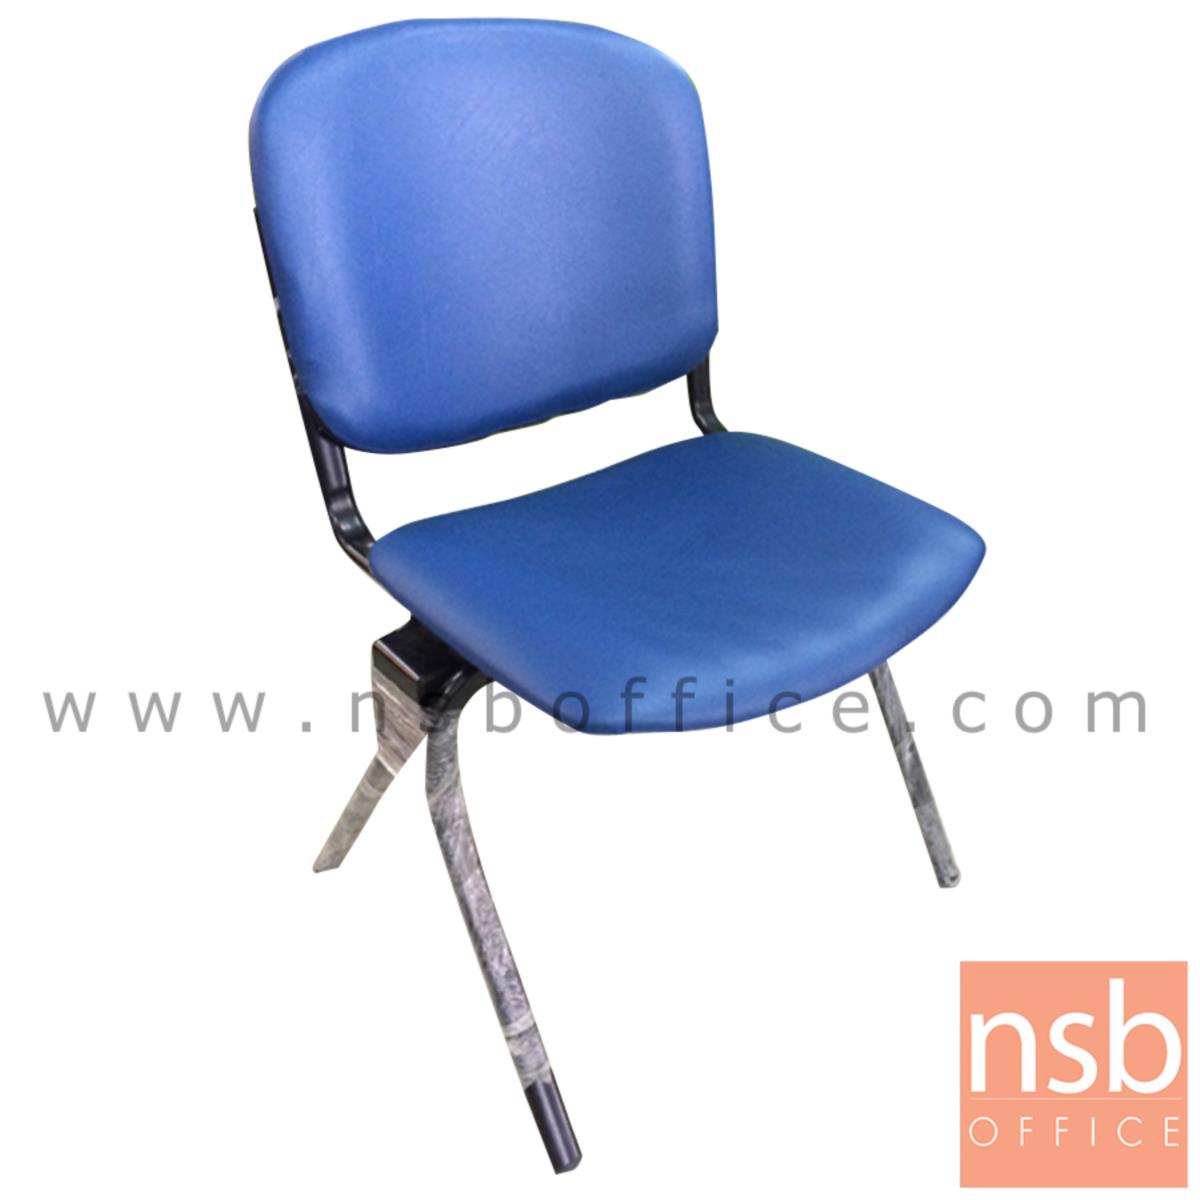 B05A026:เก้าอี้อเนกประสงค์ รุ่น A850  ขาตัววีคว่ำ